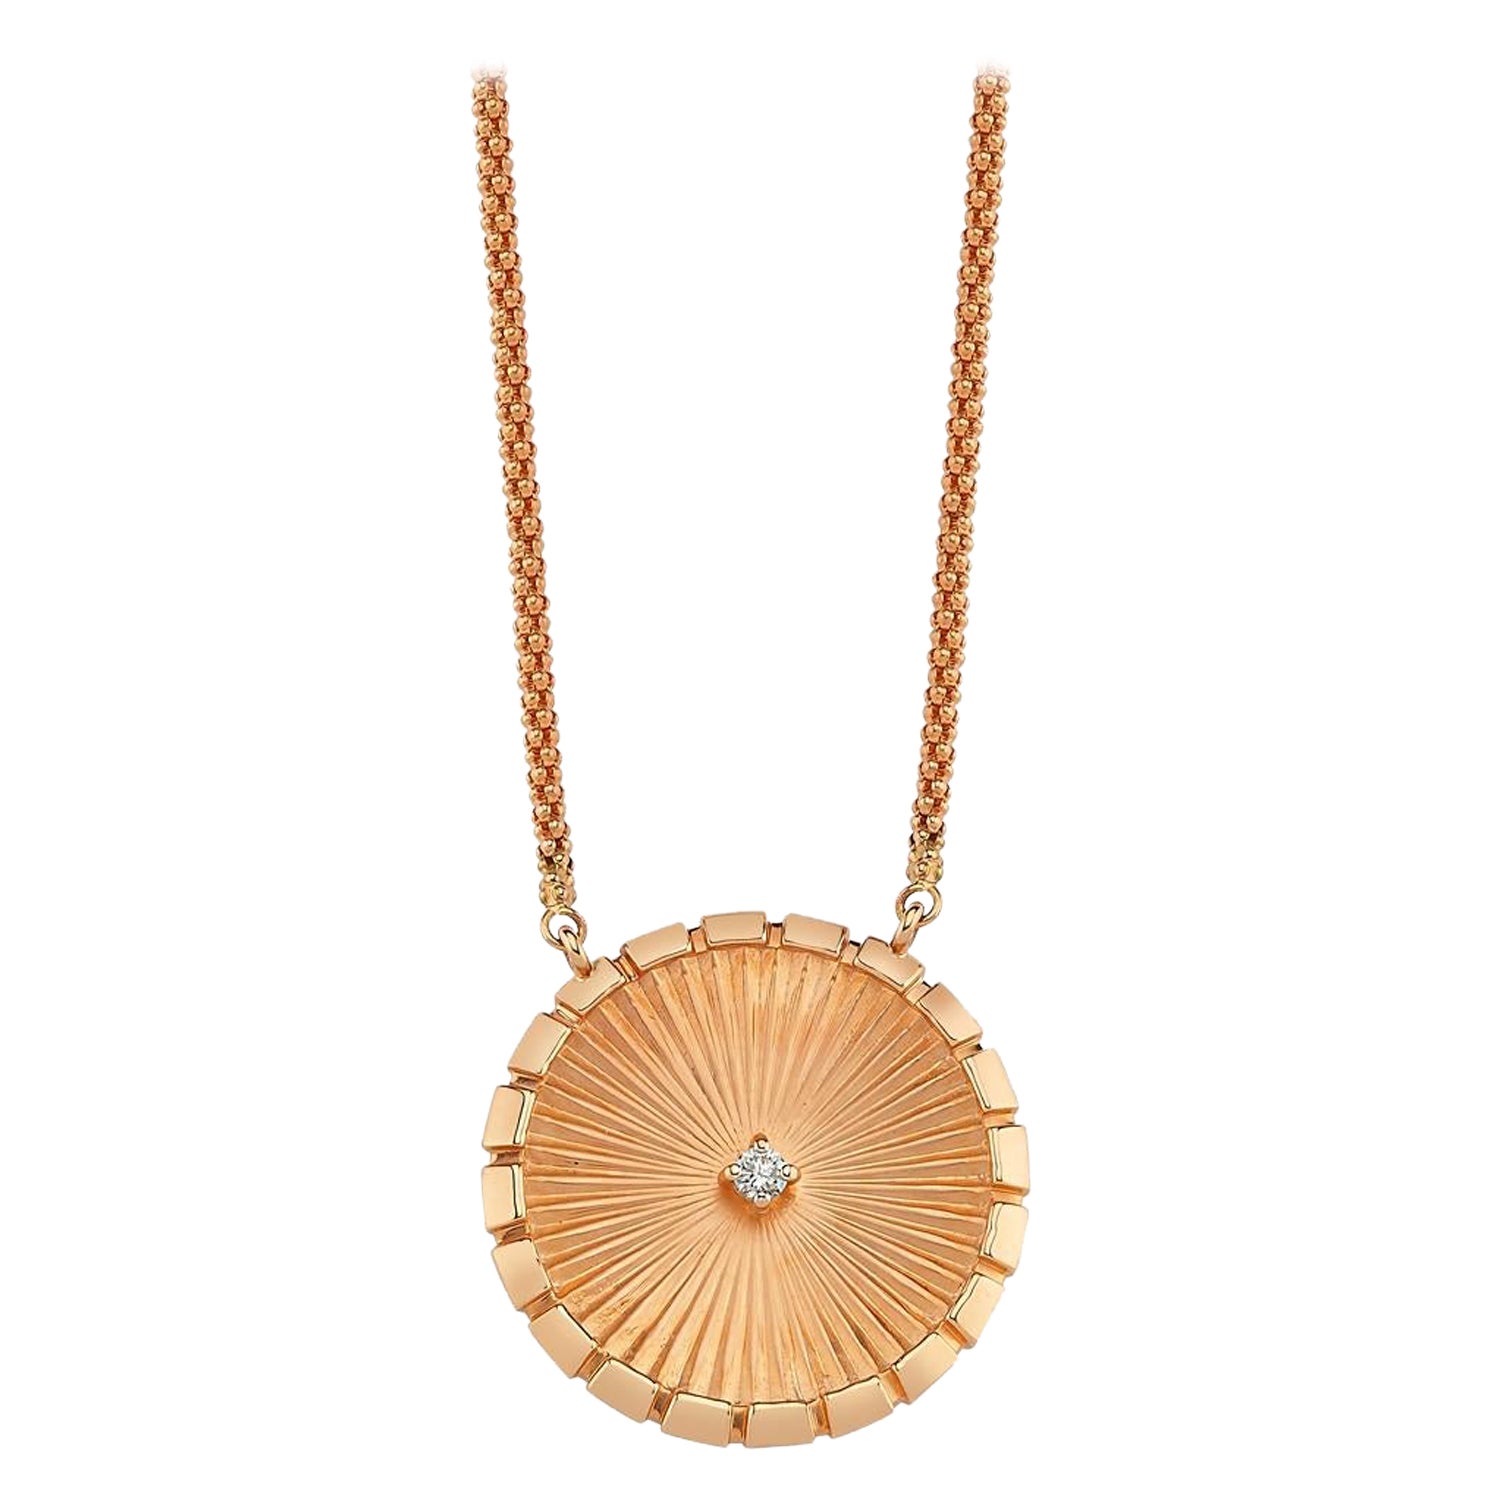 Kashchei Medallion Medium Necklace in 14K Rose Gold by Selda Jewellery